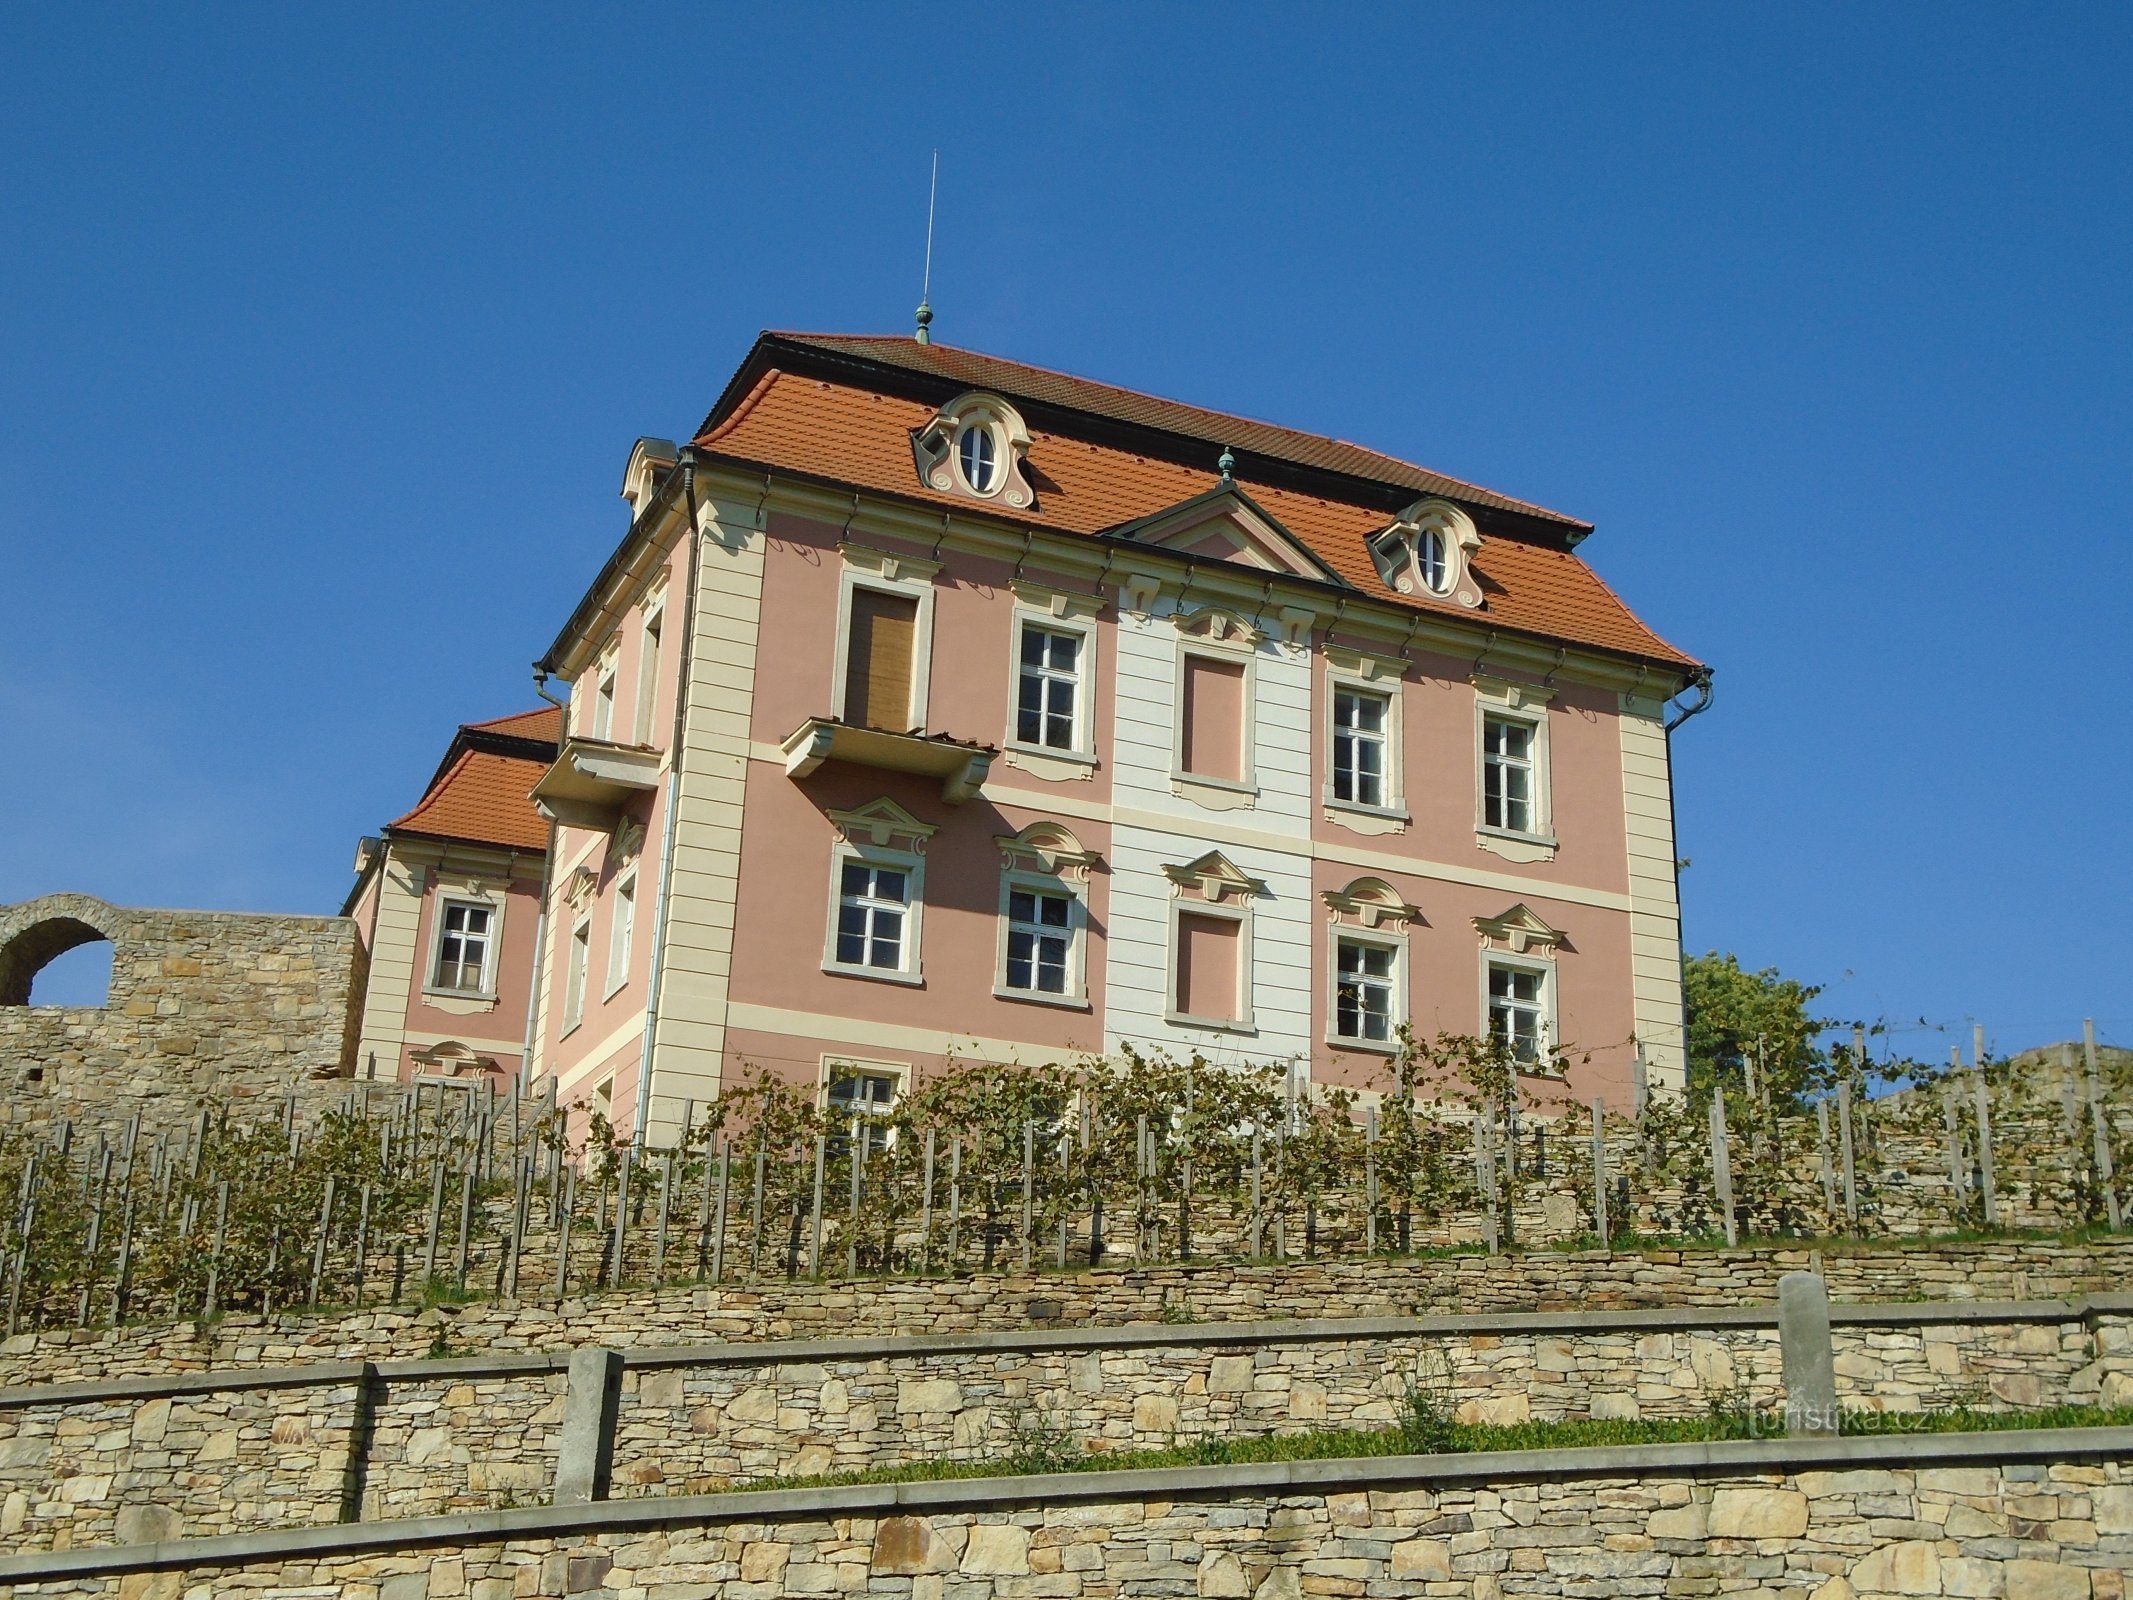 Castle (Chvalkovice)